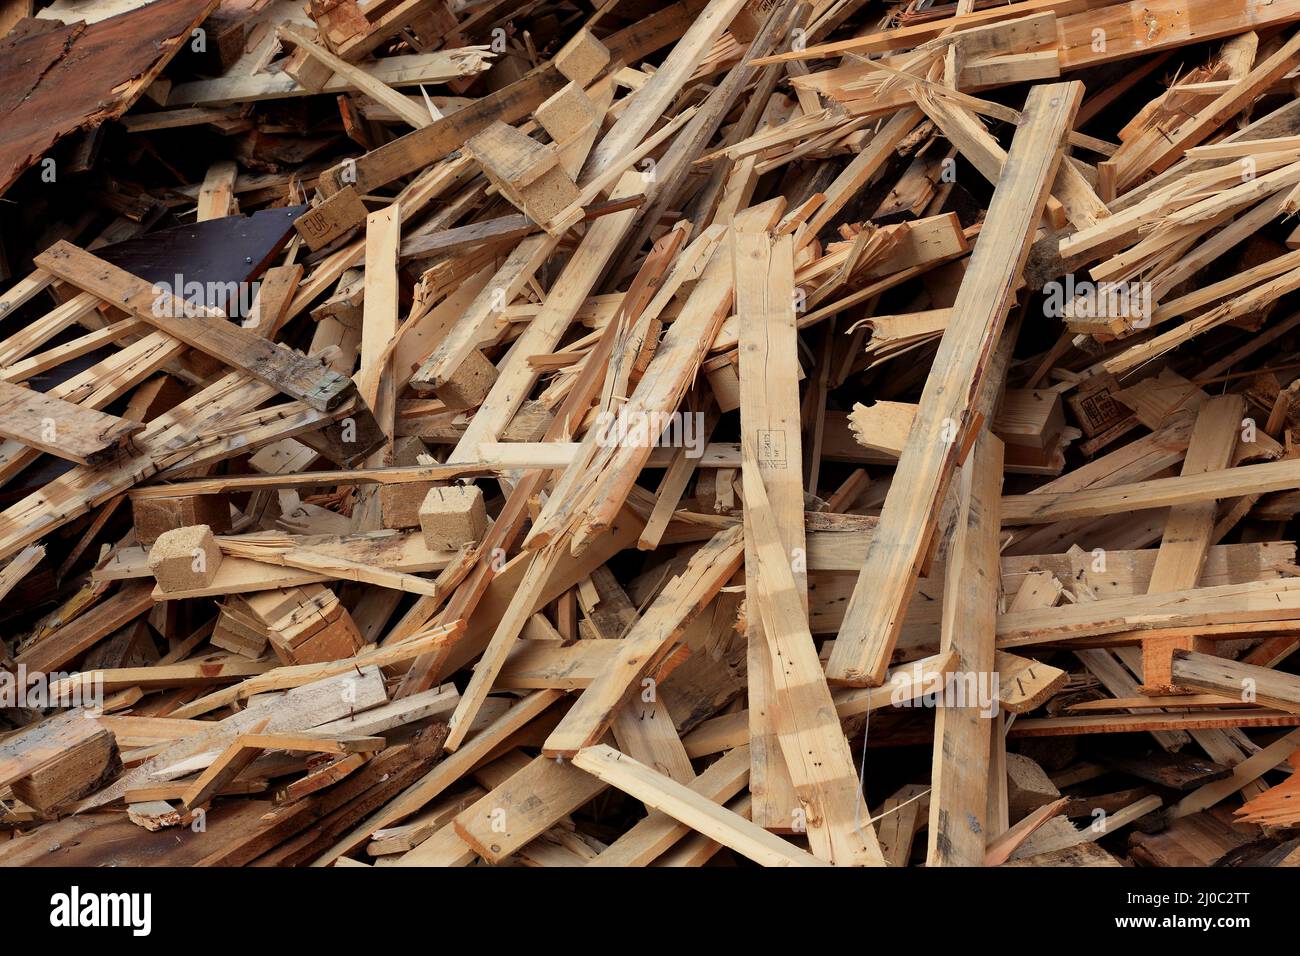 Holzabfälle, unbehandeltes Abfallholz als Brennholz zu verwerten  /  Wood waste, untreated waste wood to be used as firewood Stock Photo